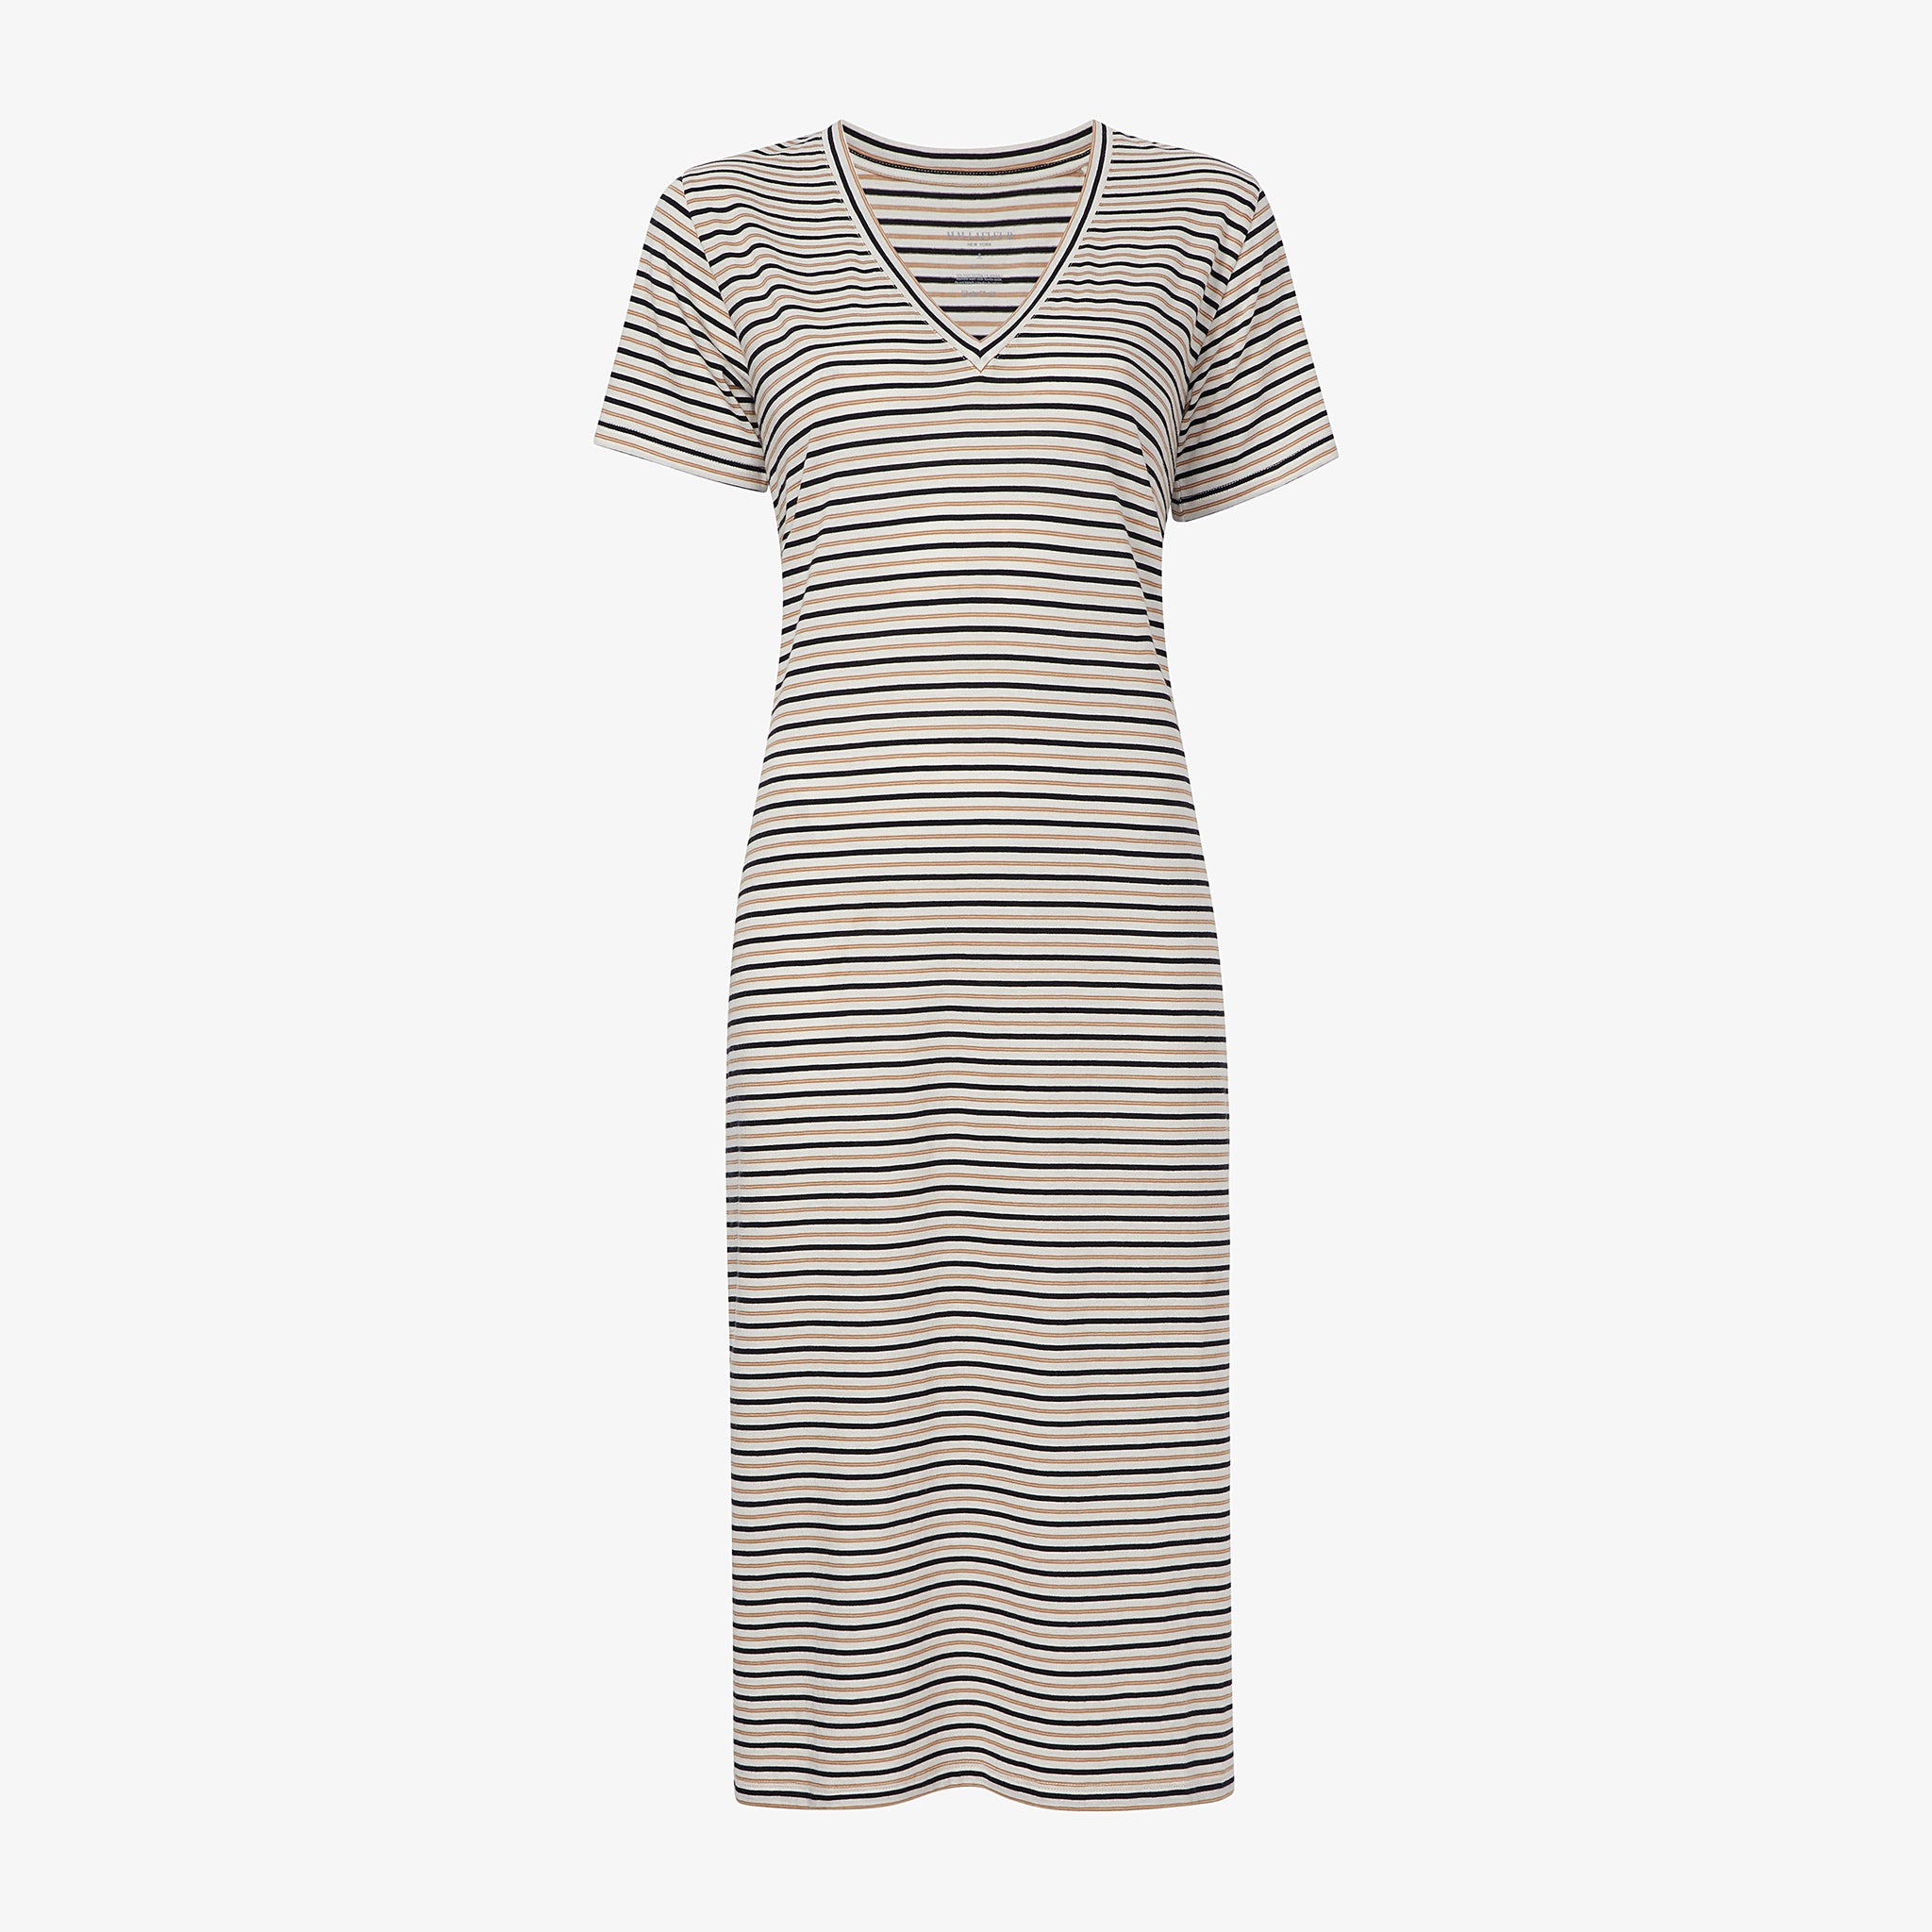 Packshot image of the Renee Dress - Thin Striped Pima Cotton in Tan / Black